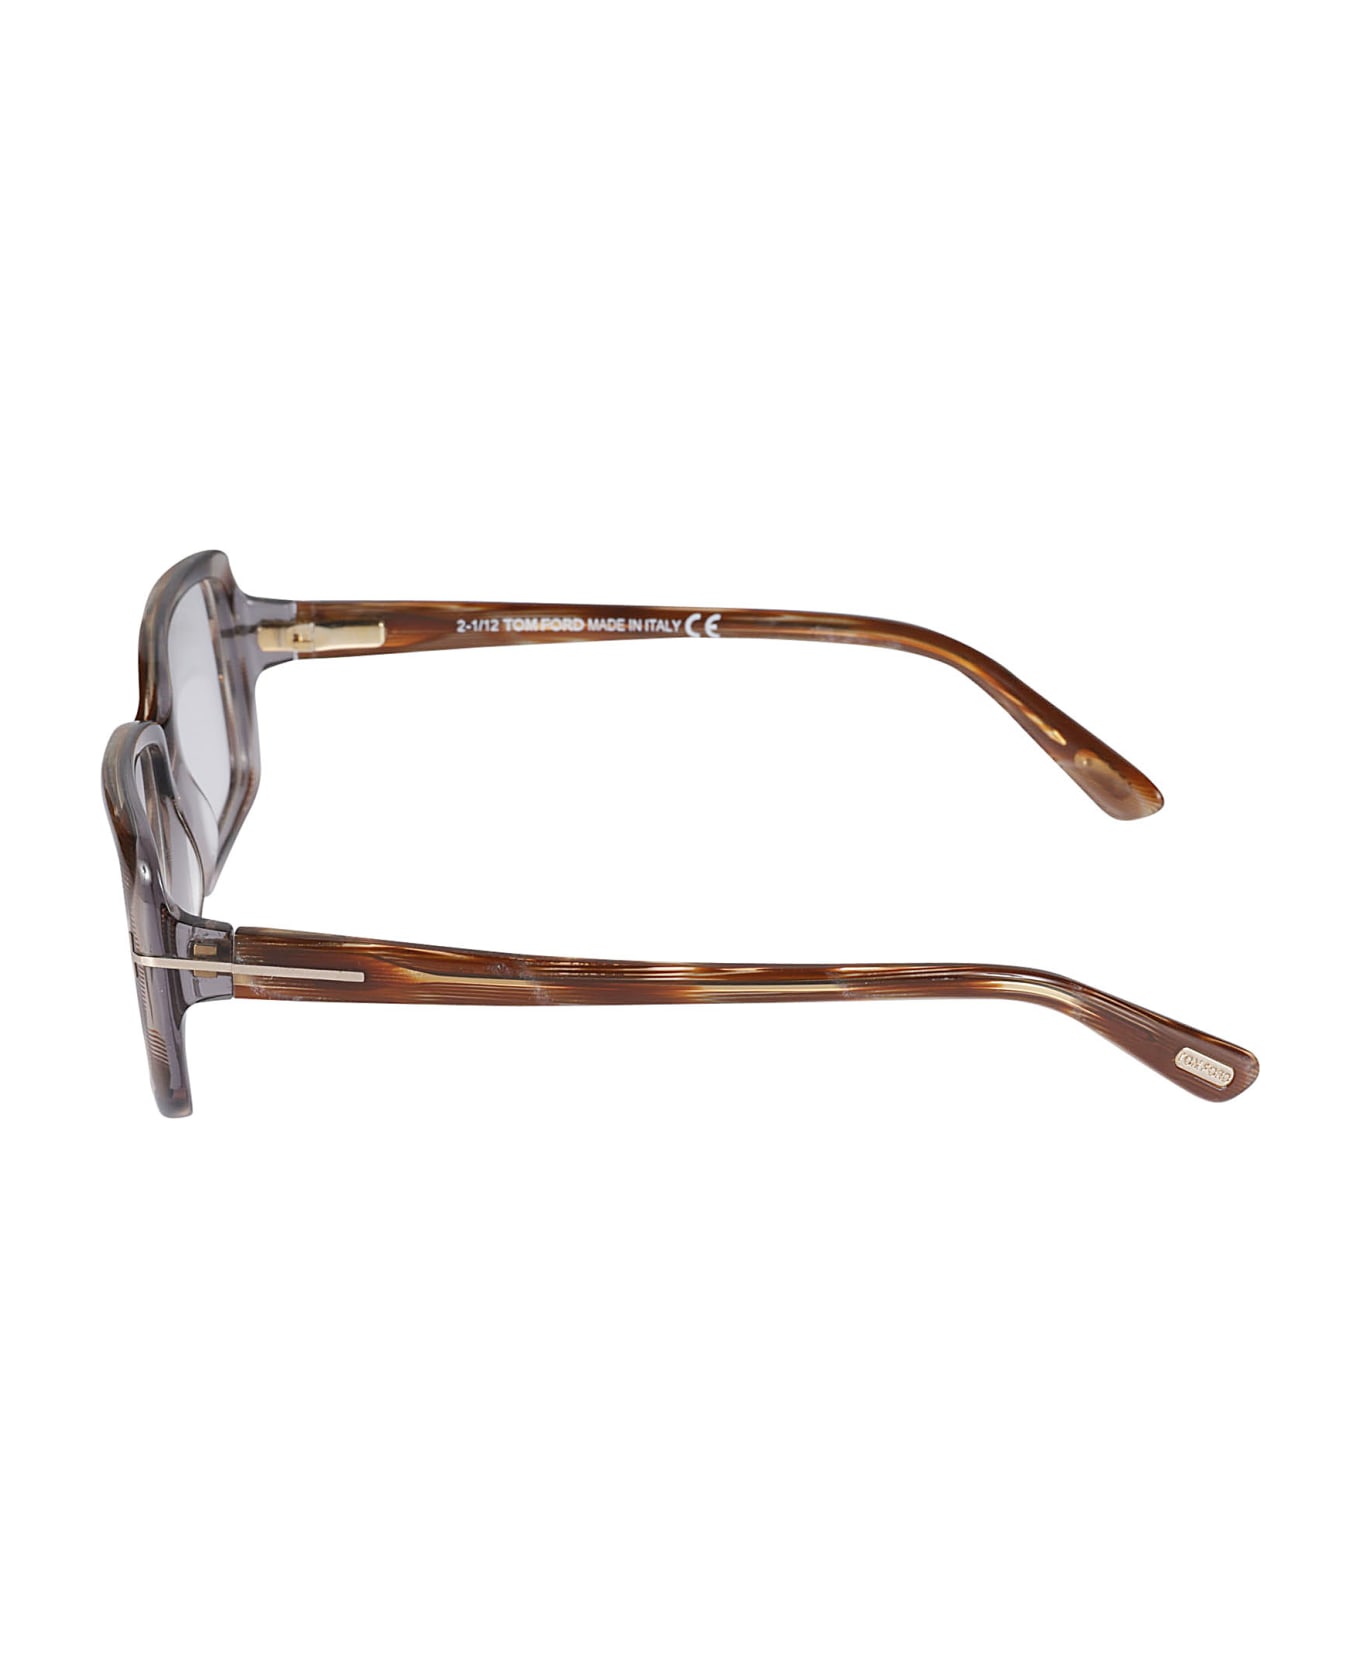 Tom Ford Eyewear Stripe Effect Frame Glasses - 059